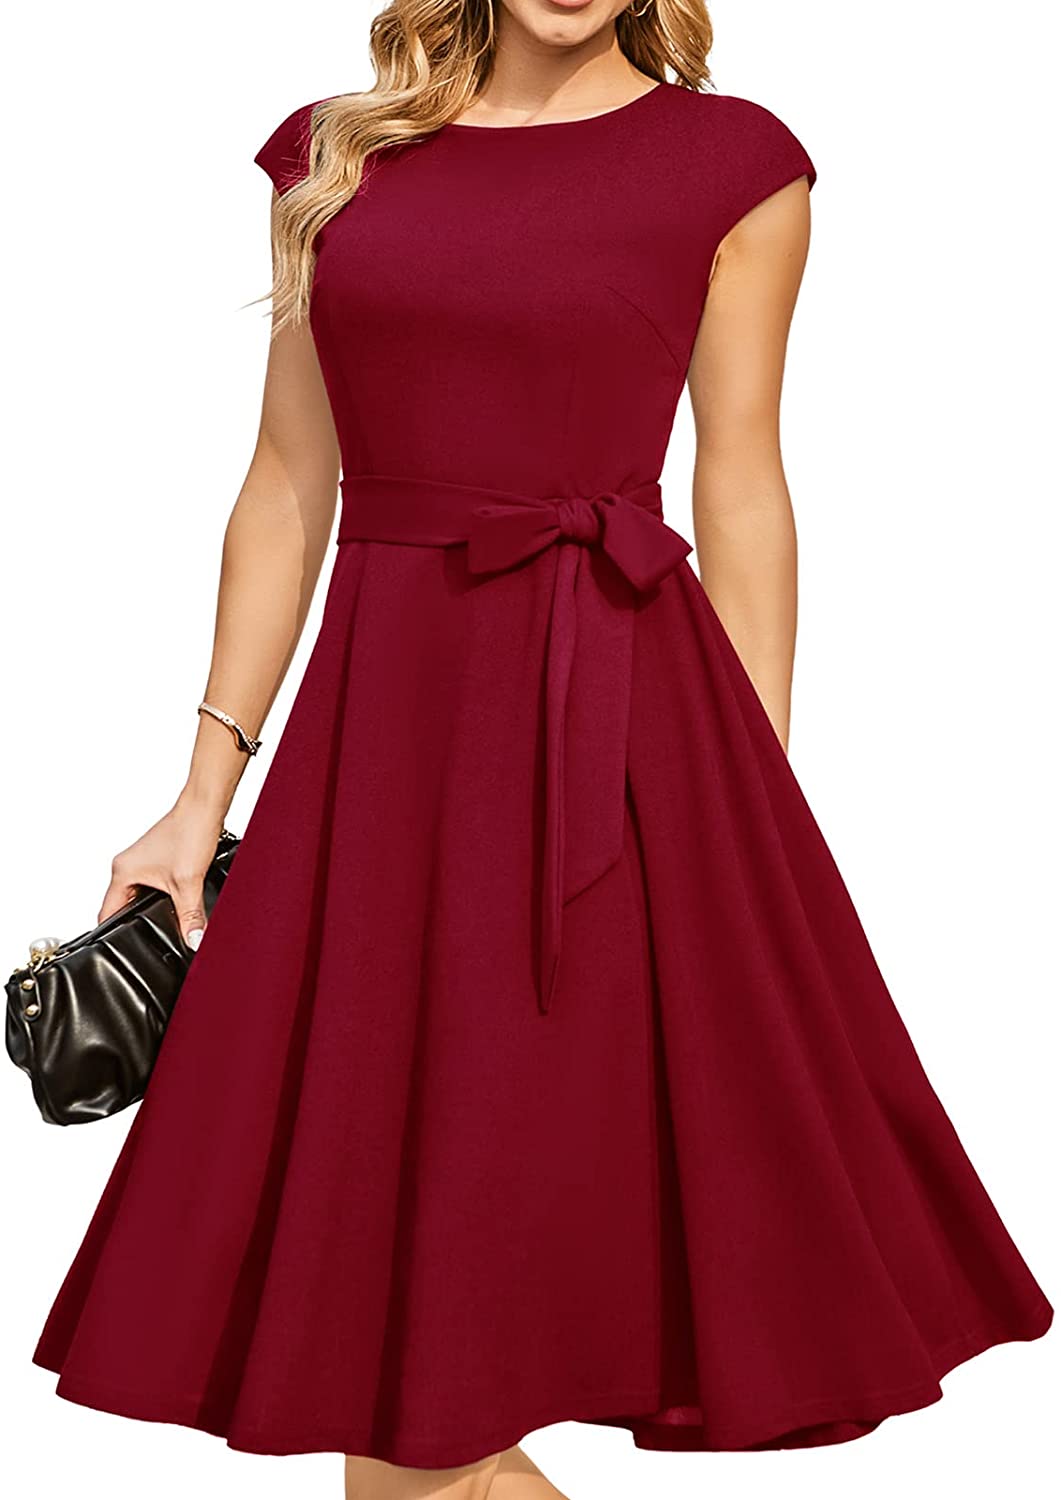 Women's Knee High Dress Floral Chiffon Long Sleeve Fashion Casual Party  Skirts | eBay